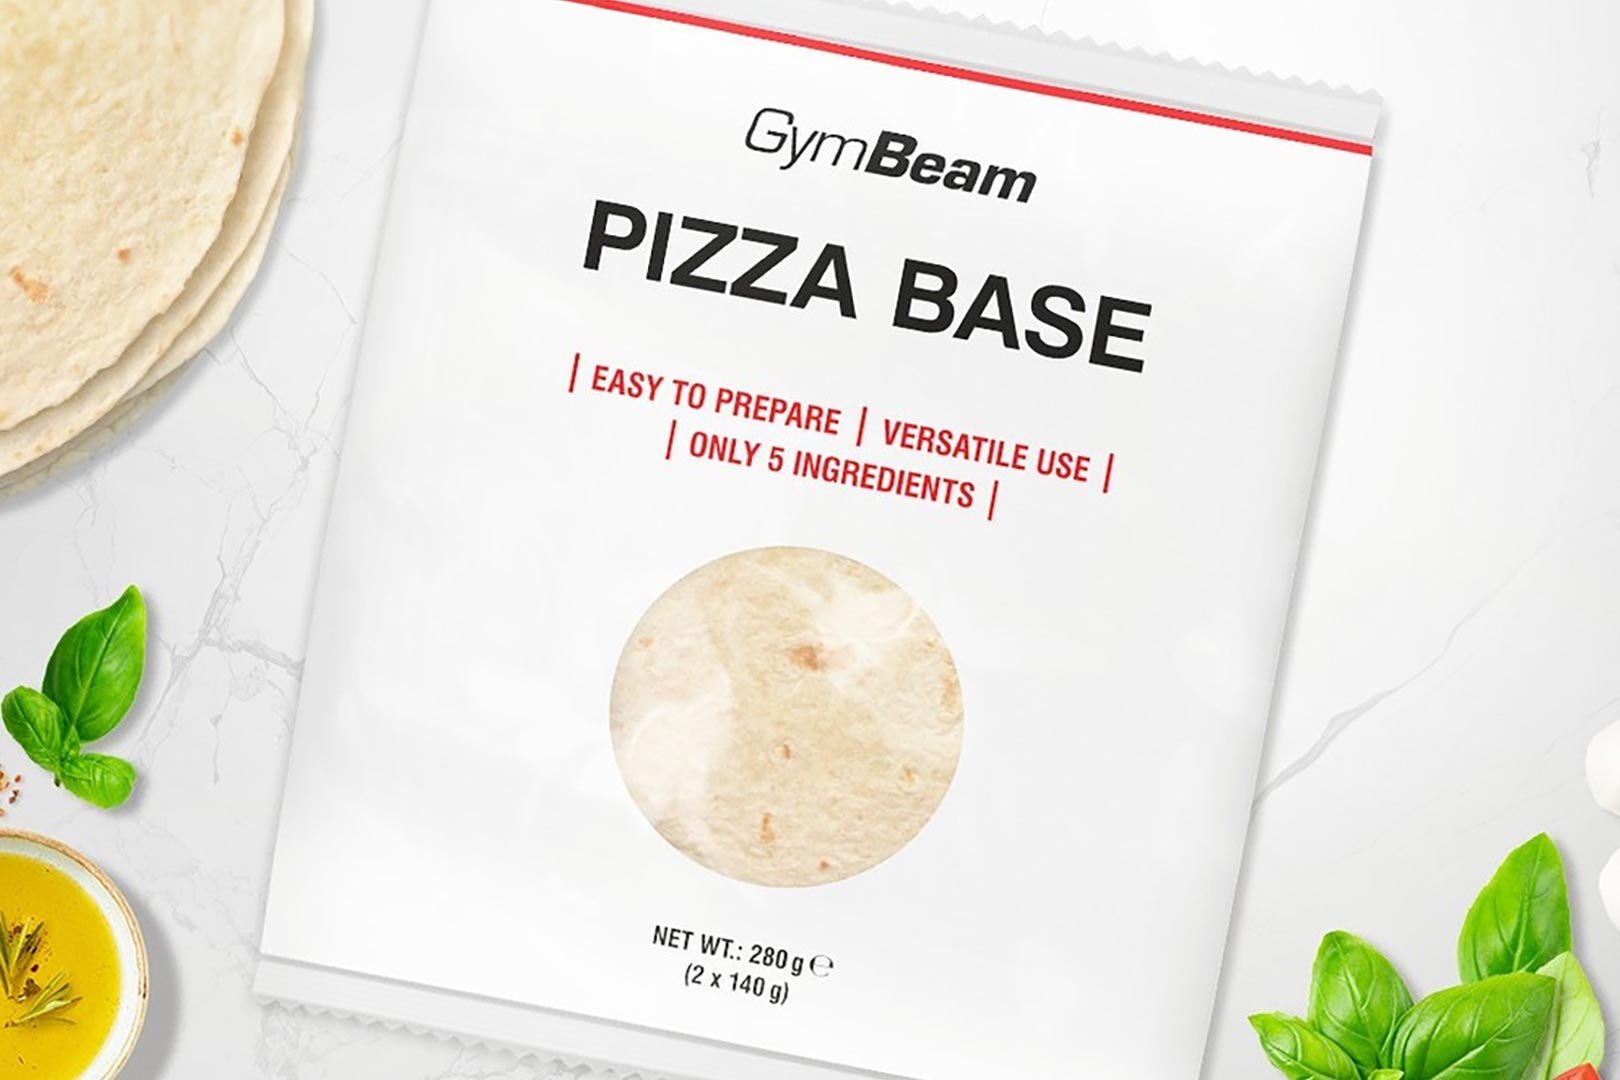 Gymbeam Pizza Base